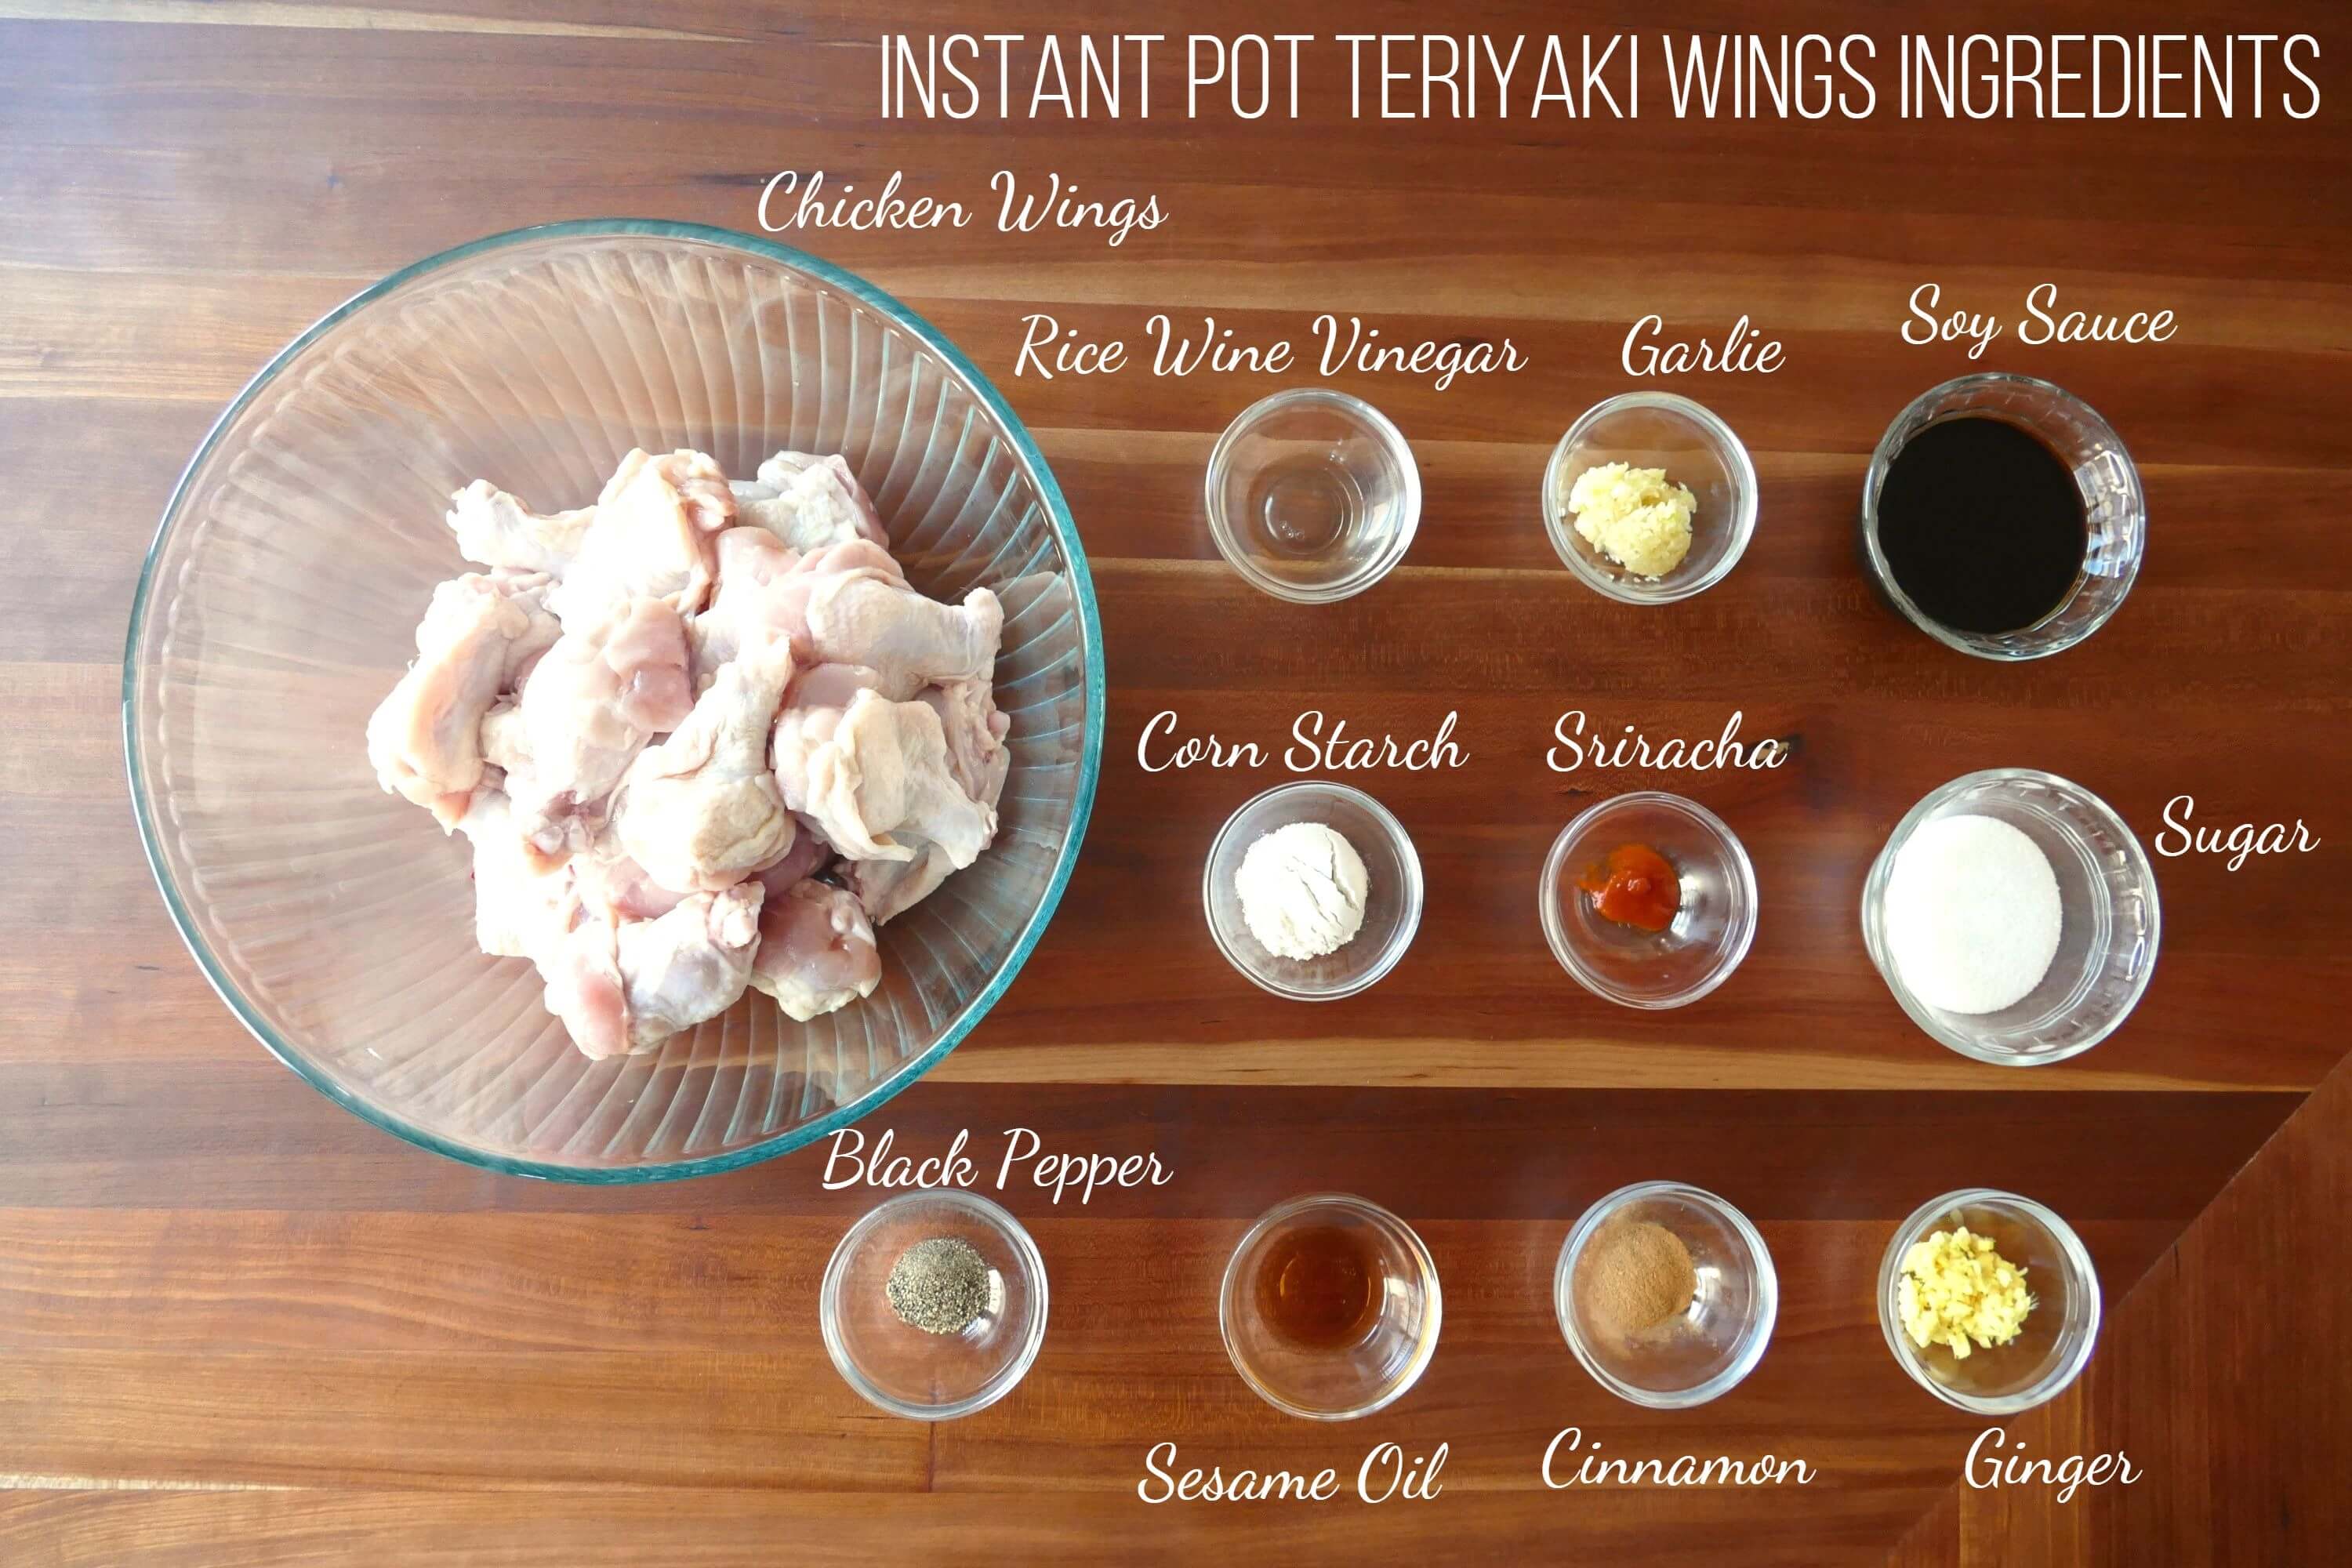 Instant Pot Teriyaki wings ingredients - wings, rice wine vinegar, garlic, soy sauce, cornstarch, sriracha, sugar, black pepper, sesame oil, cinnamon, ginger